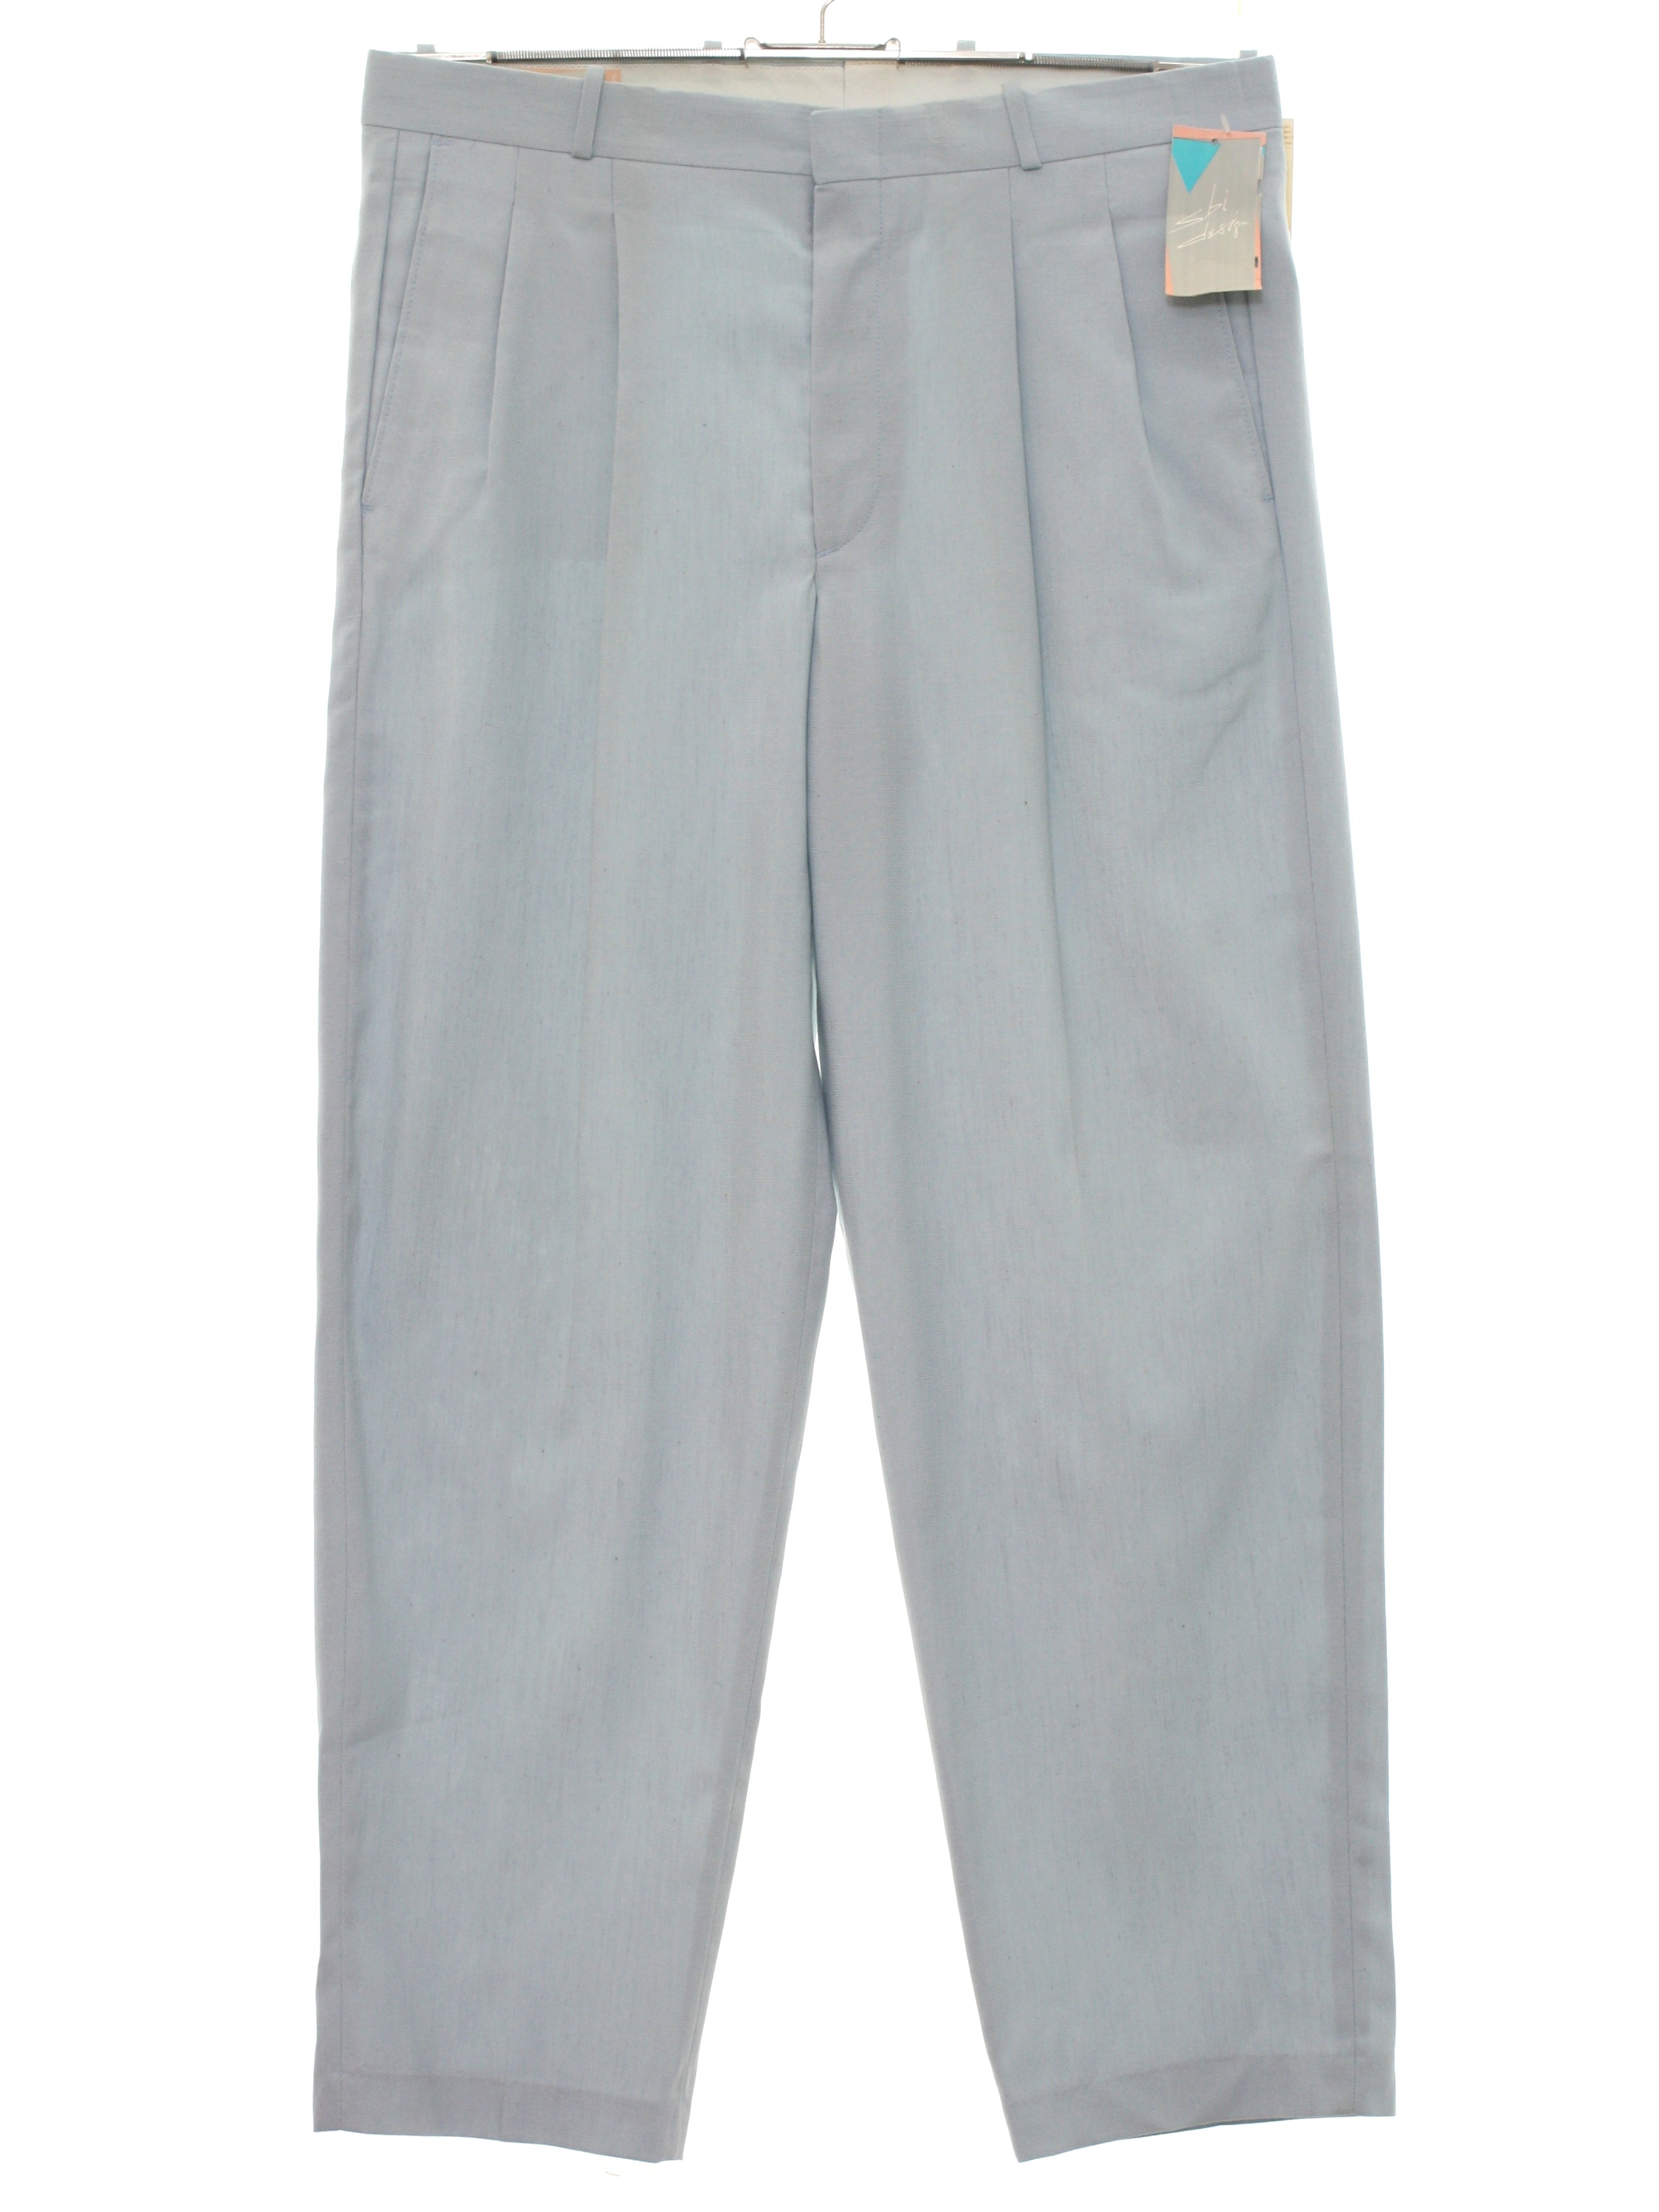 Retro 80s Pants (SBI Design) : 80s -SBI Design- Mens ice blue rayon ...